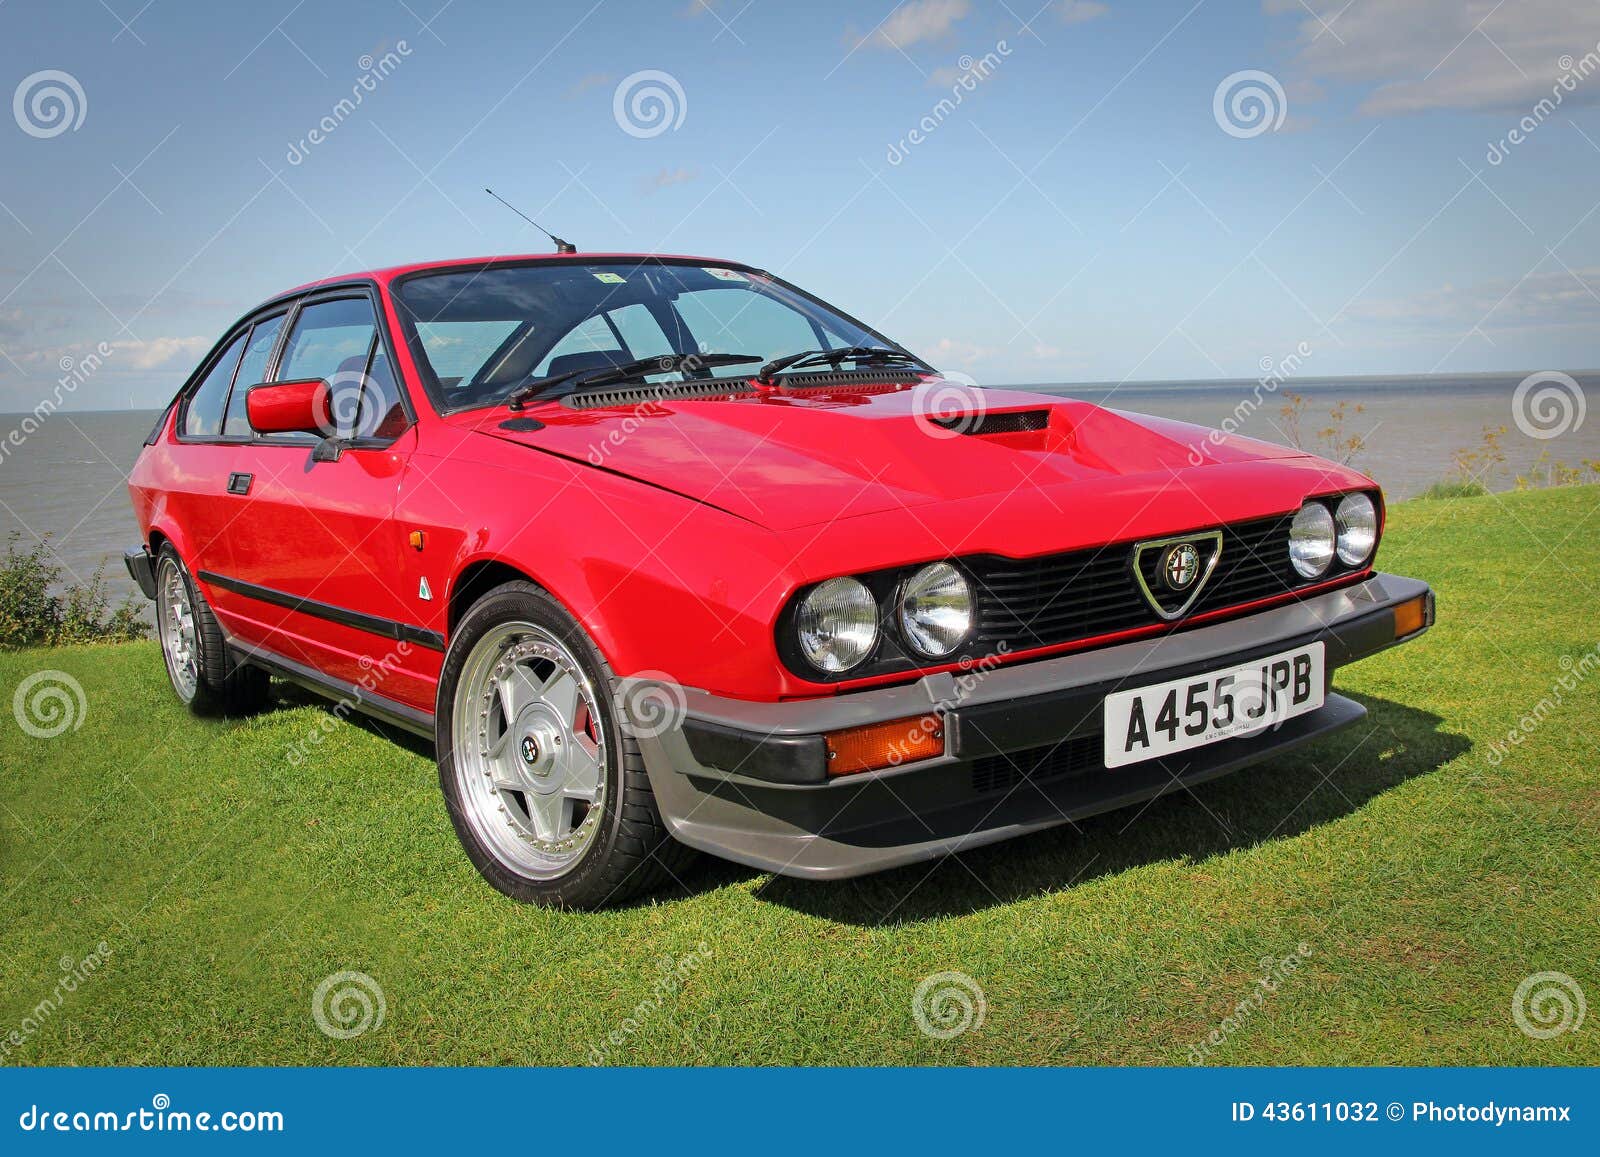 Vintage Alfa Romeo Editorial Photography - Image: 43611032